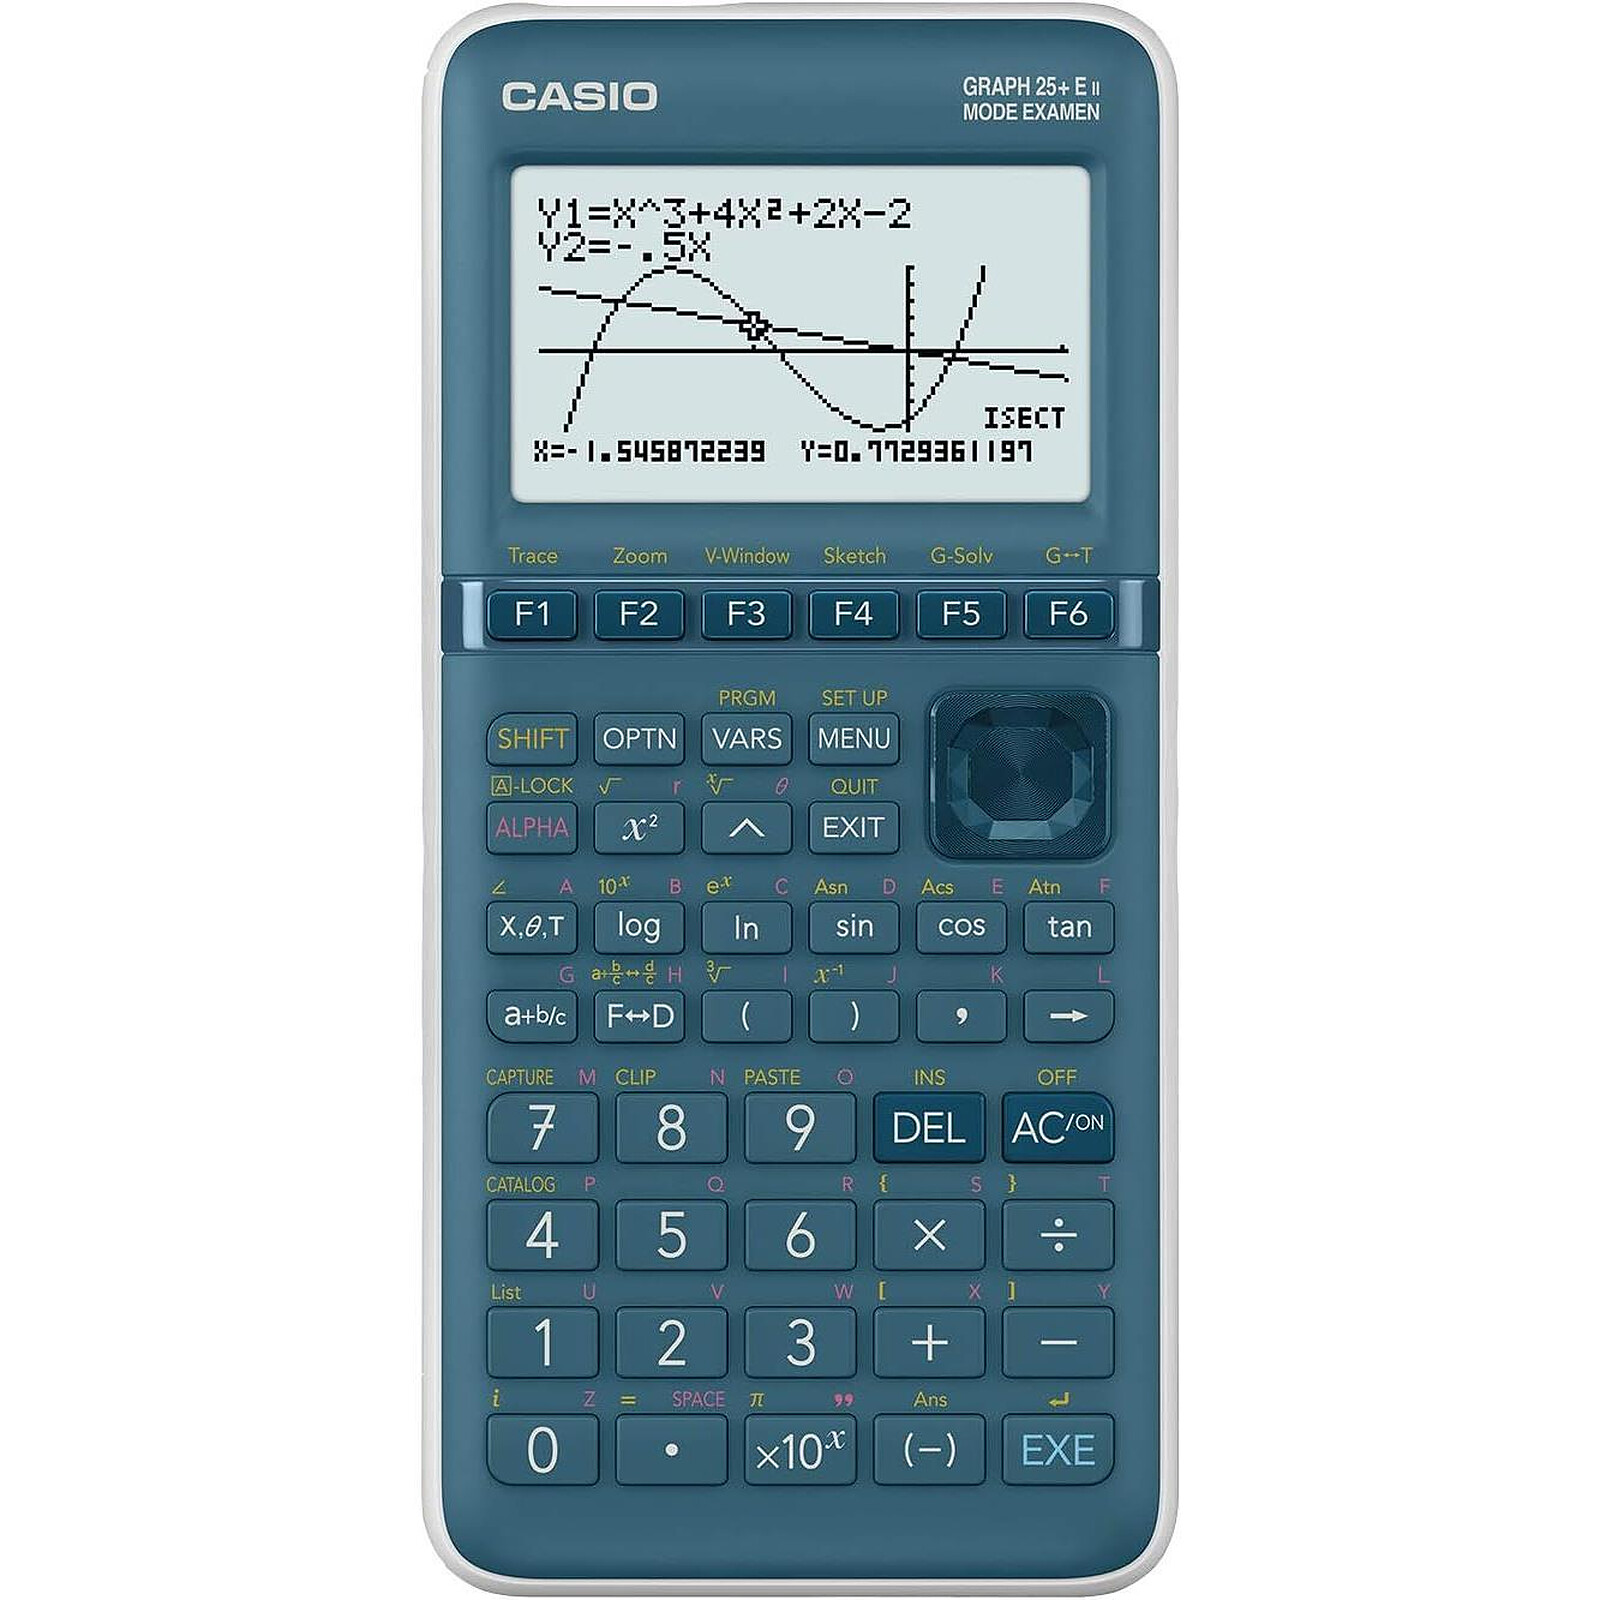 Casio, Calculatrice graphique, Graph 35+E II, Mode examen